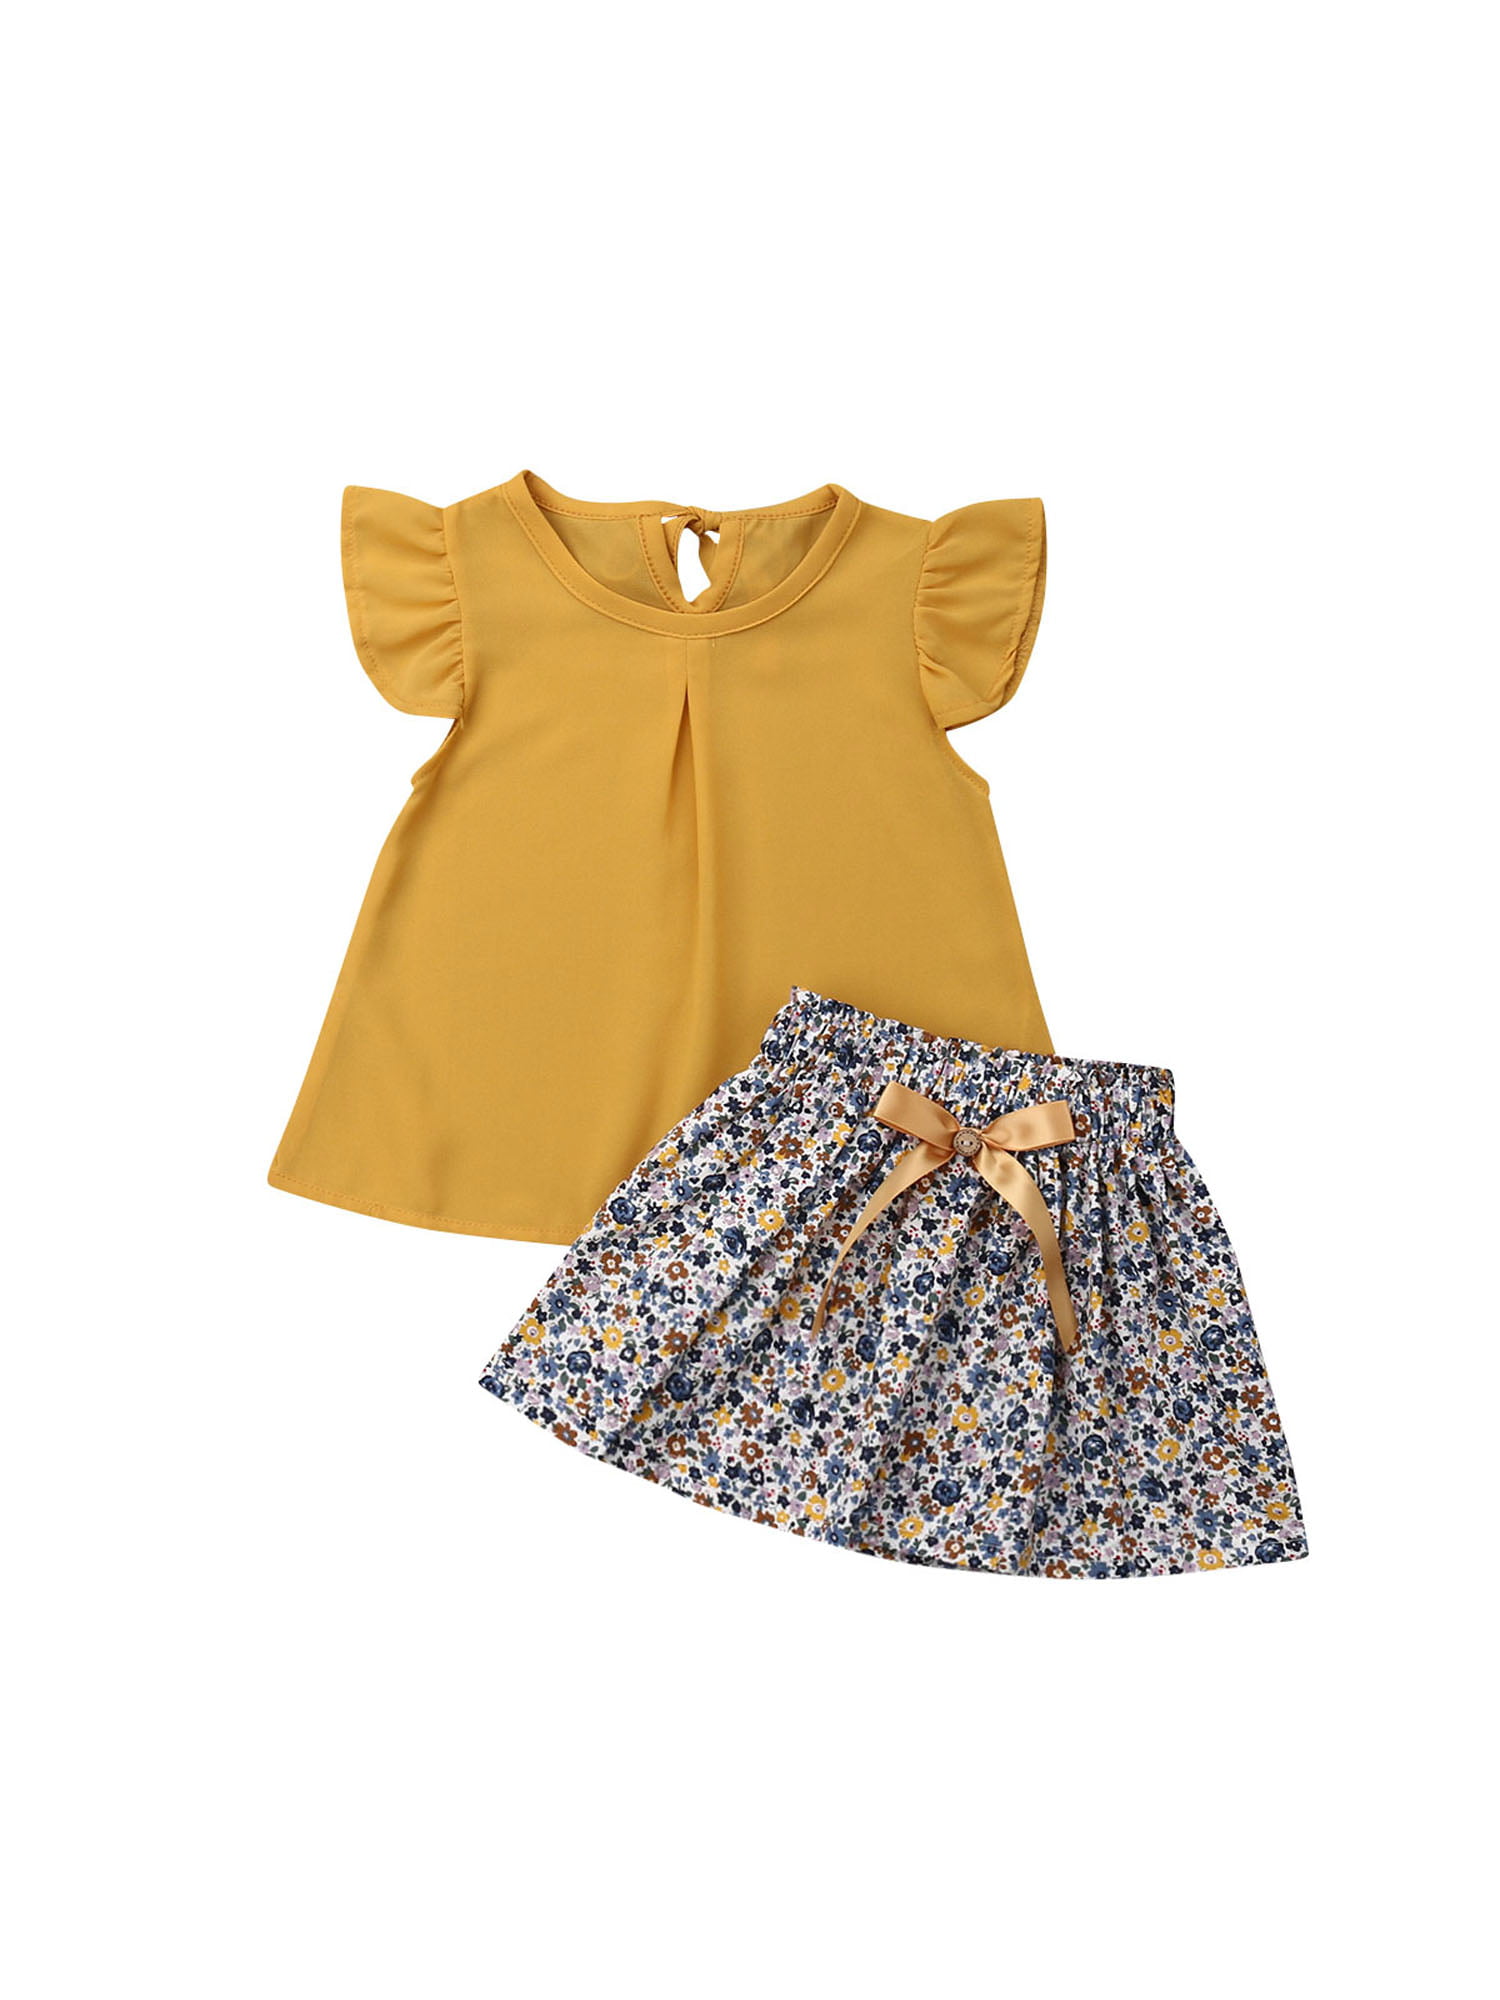 2PCS Toddler Baby Kid Girl Party Outfit Tops T-Shirt+Floral Tutu Skirt Set Dress 